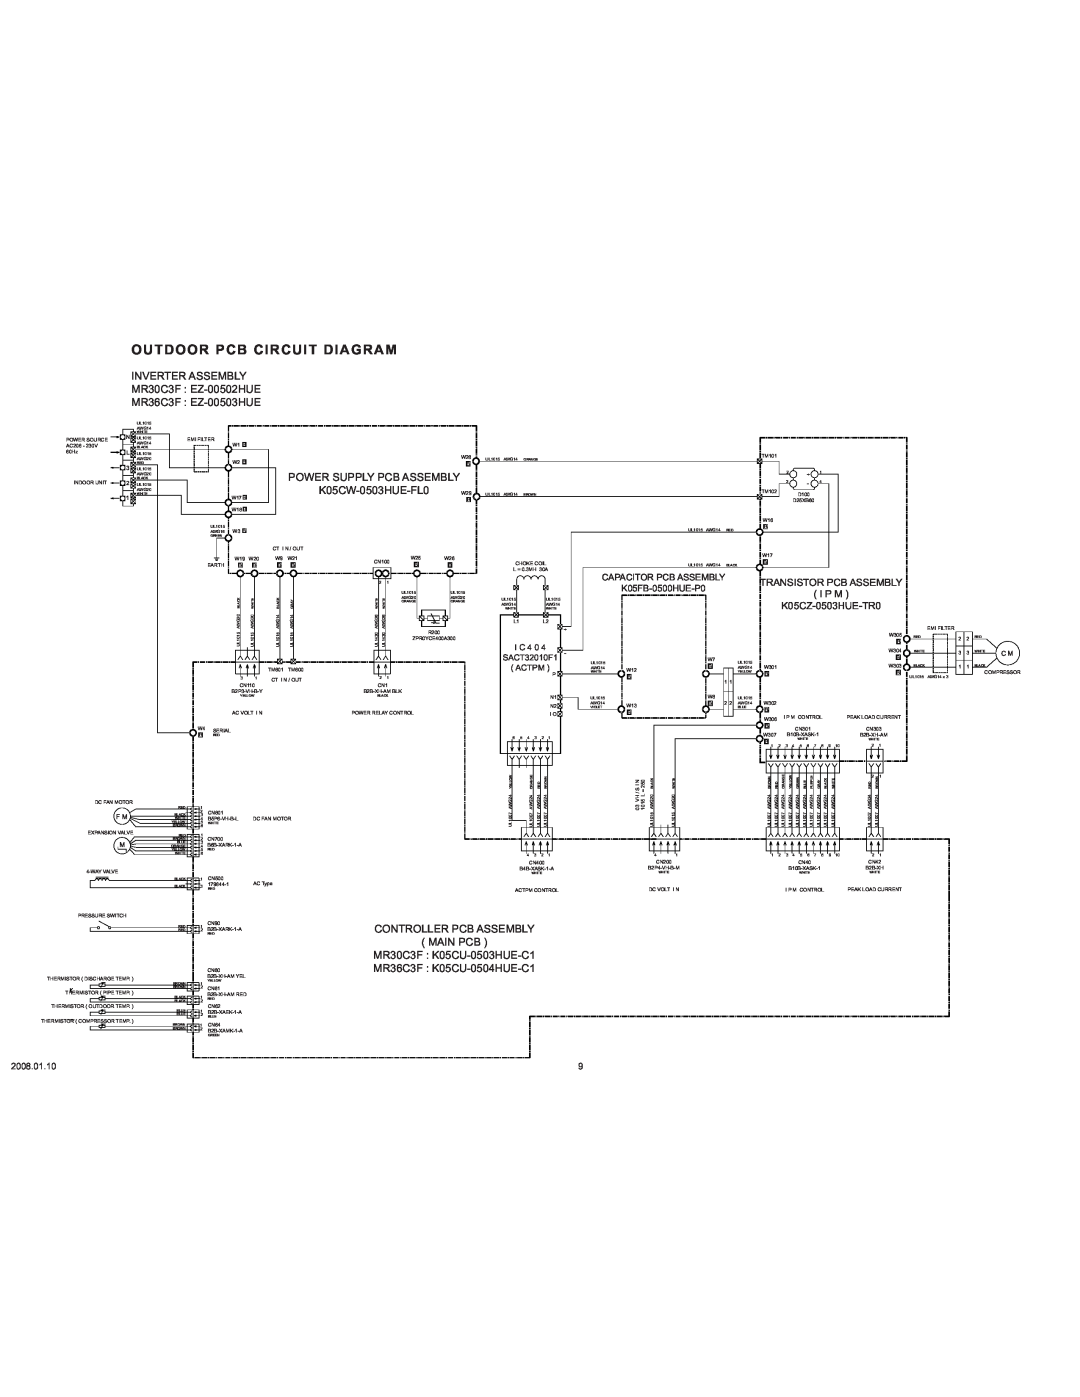 Friedrich MW36C3F specifications Outdoor Pcb Circuit Diagram, Inverter Assembly, MR30C3F EZ-00502HUE, MR36C3F EZ-00503HUE 